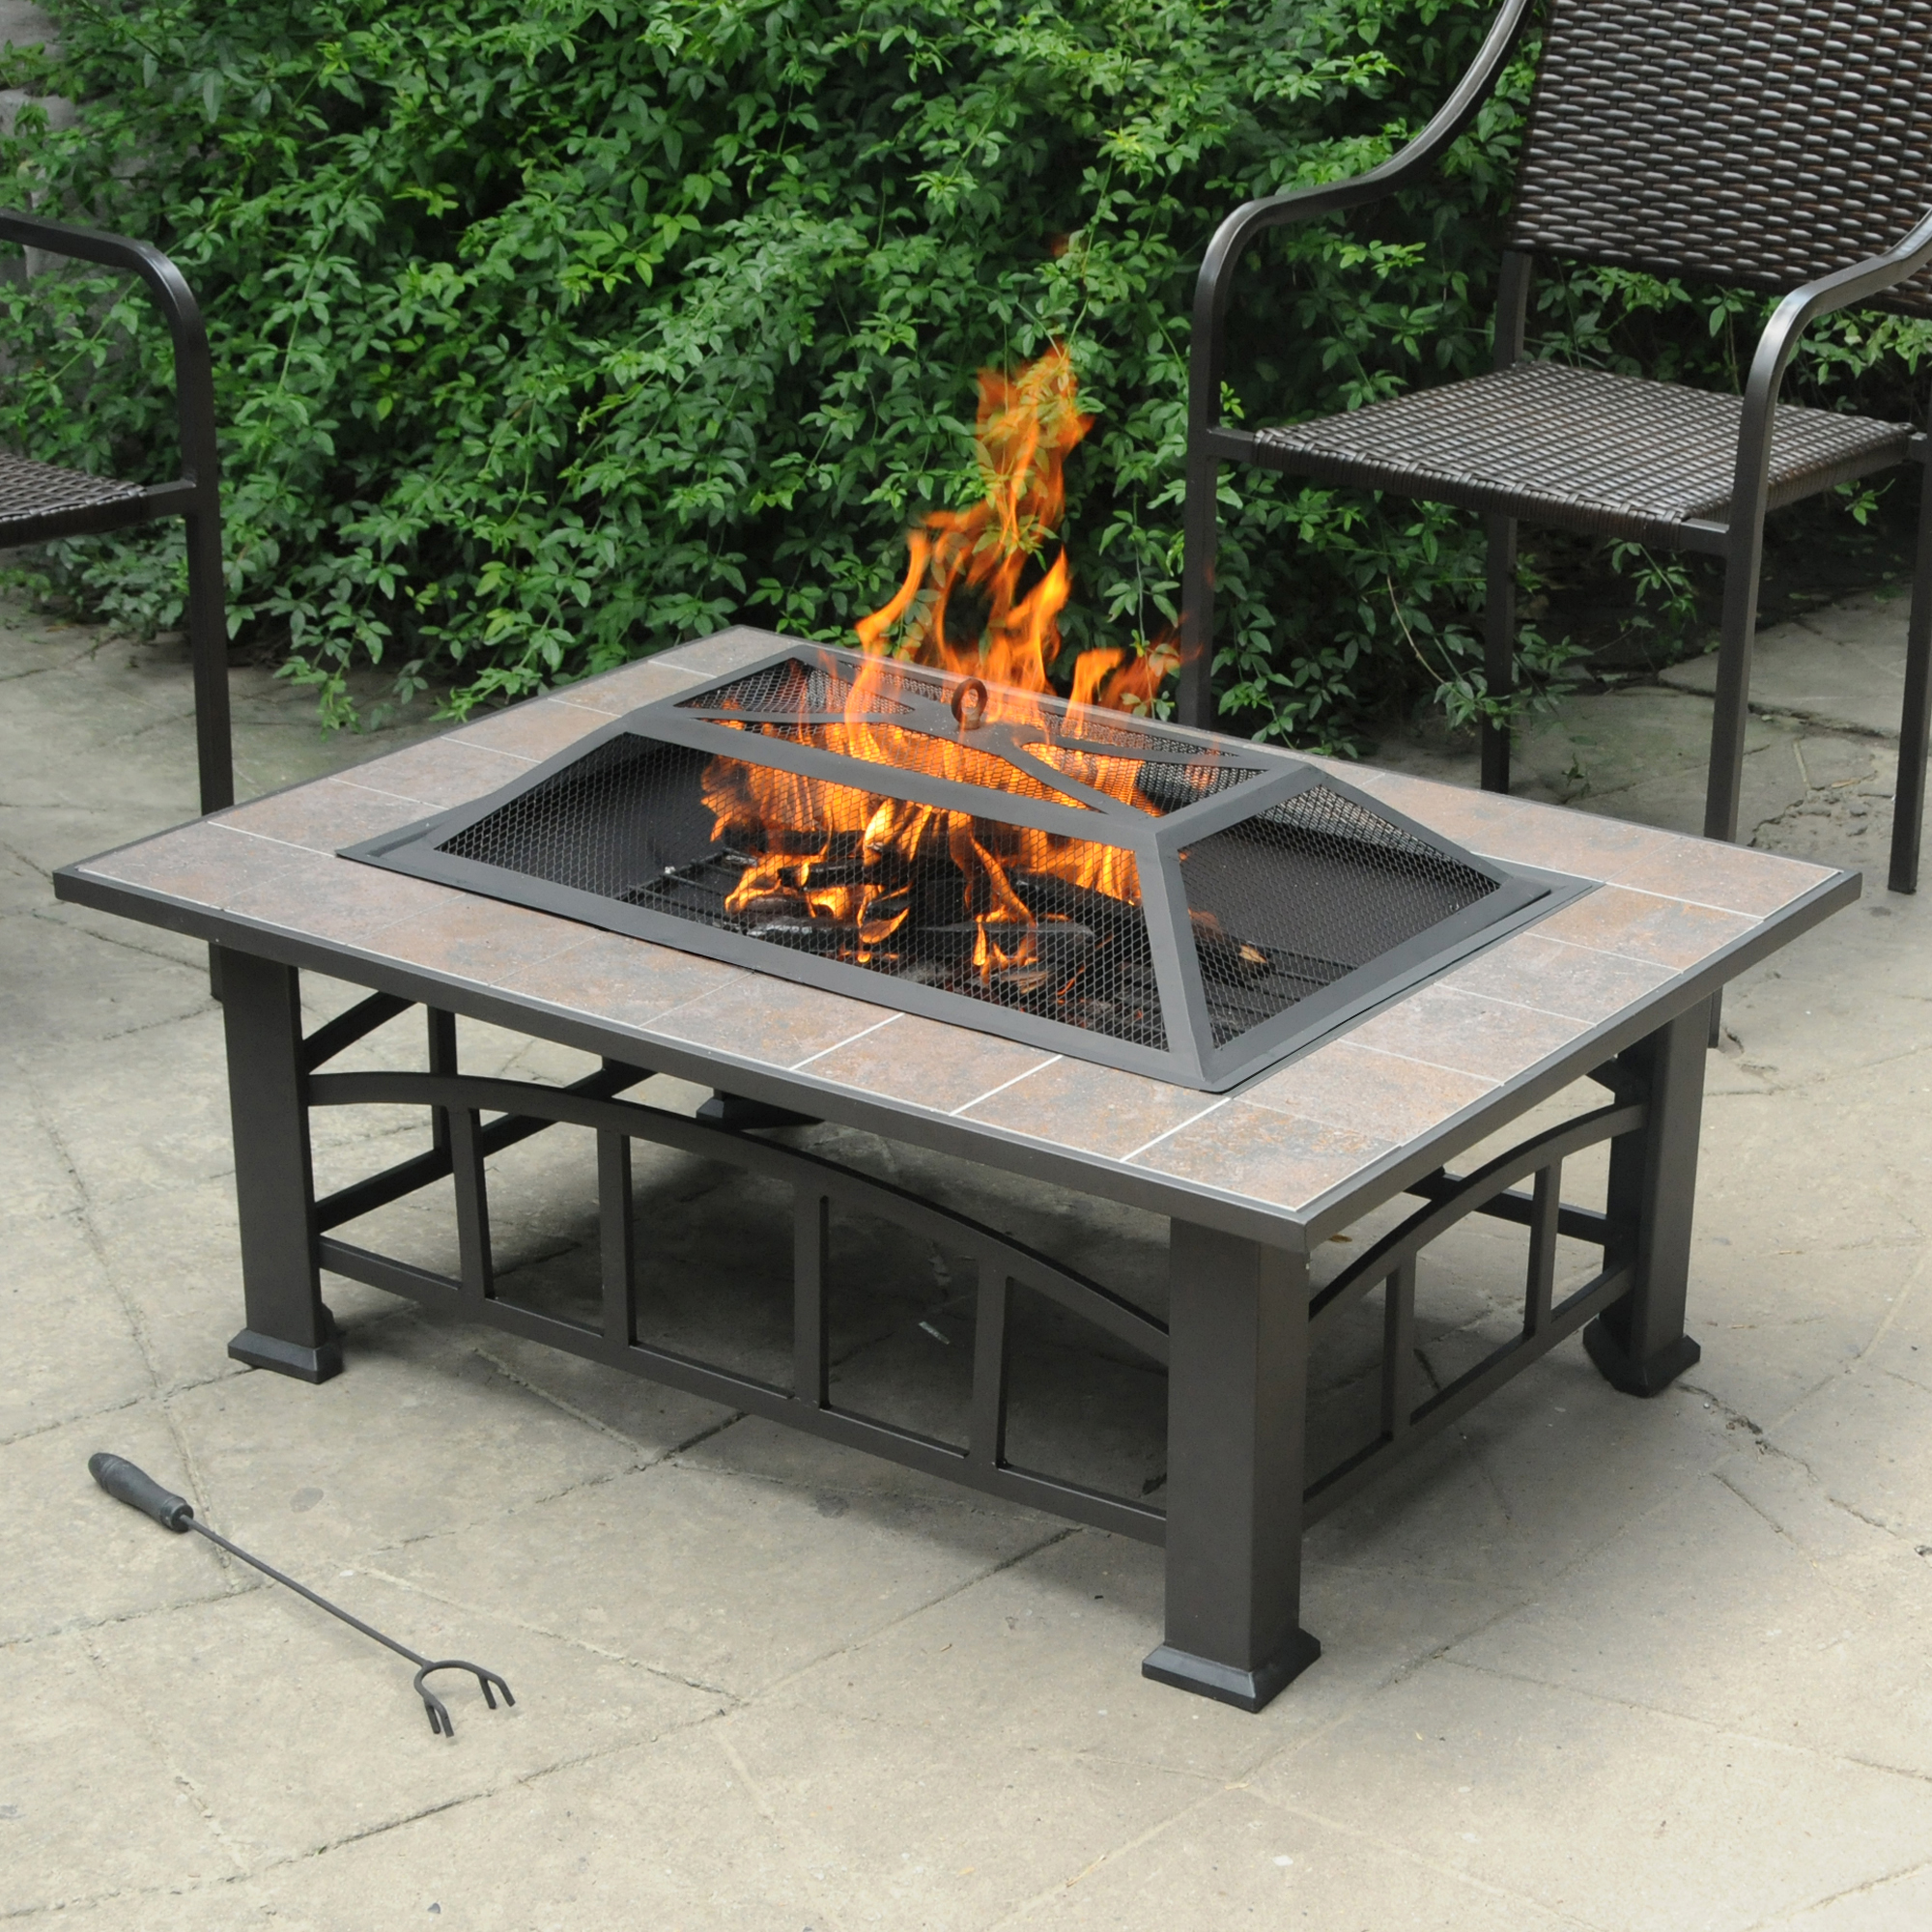 Axxonn Rectangular Tile Top Fire Pit, Brownish Bronze (37" x 28") wood burning Fire Bowl - image 1 of 5